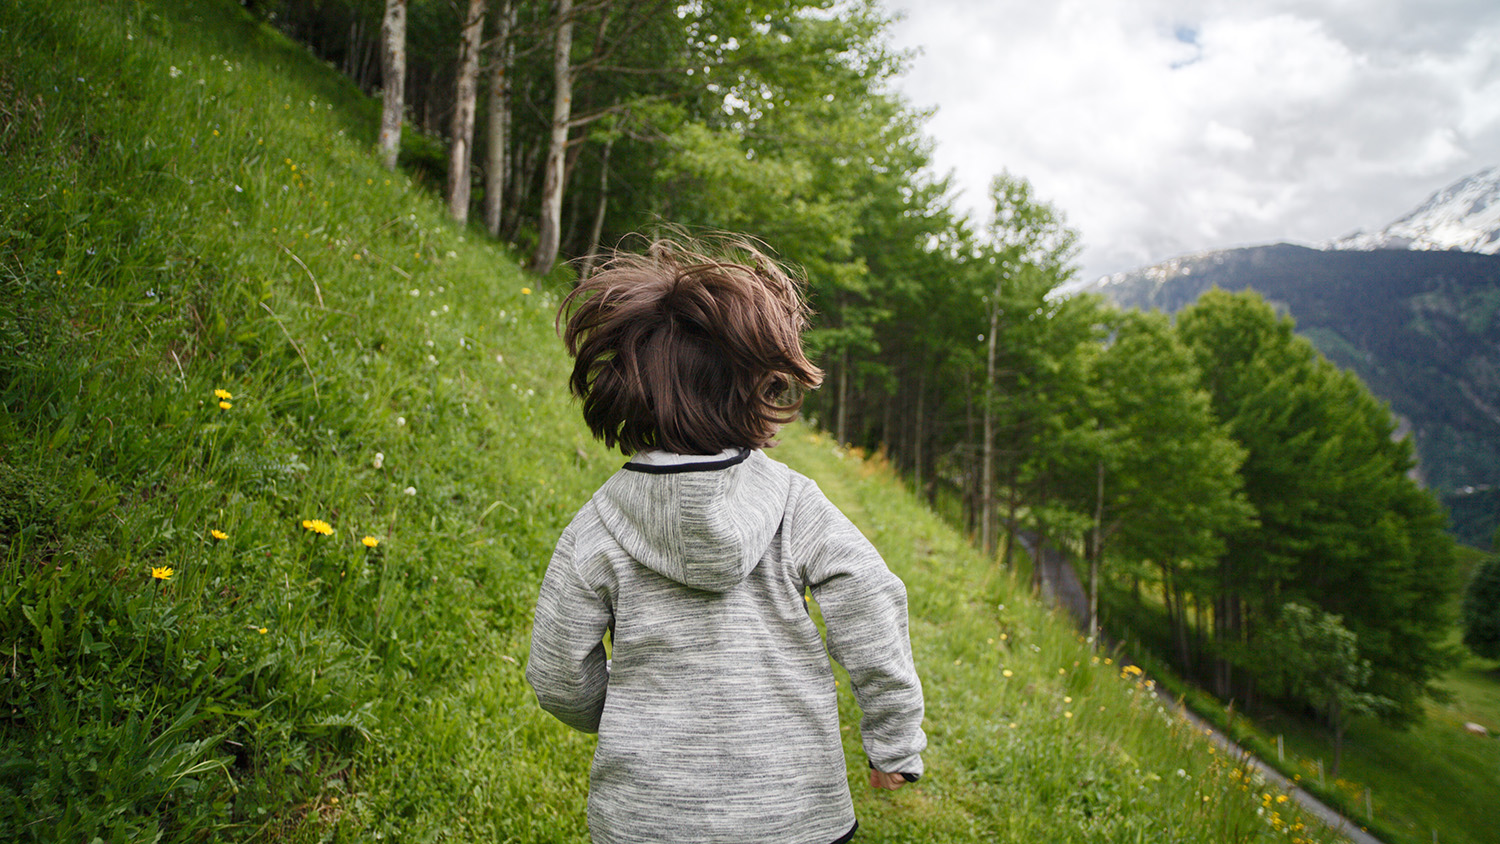 child running outdoors